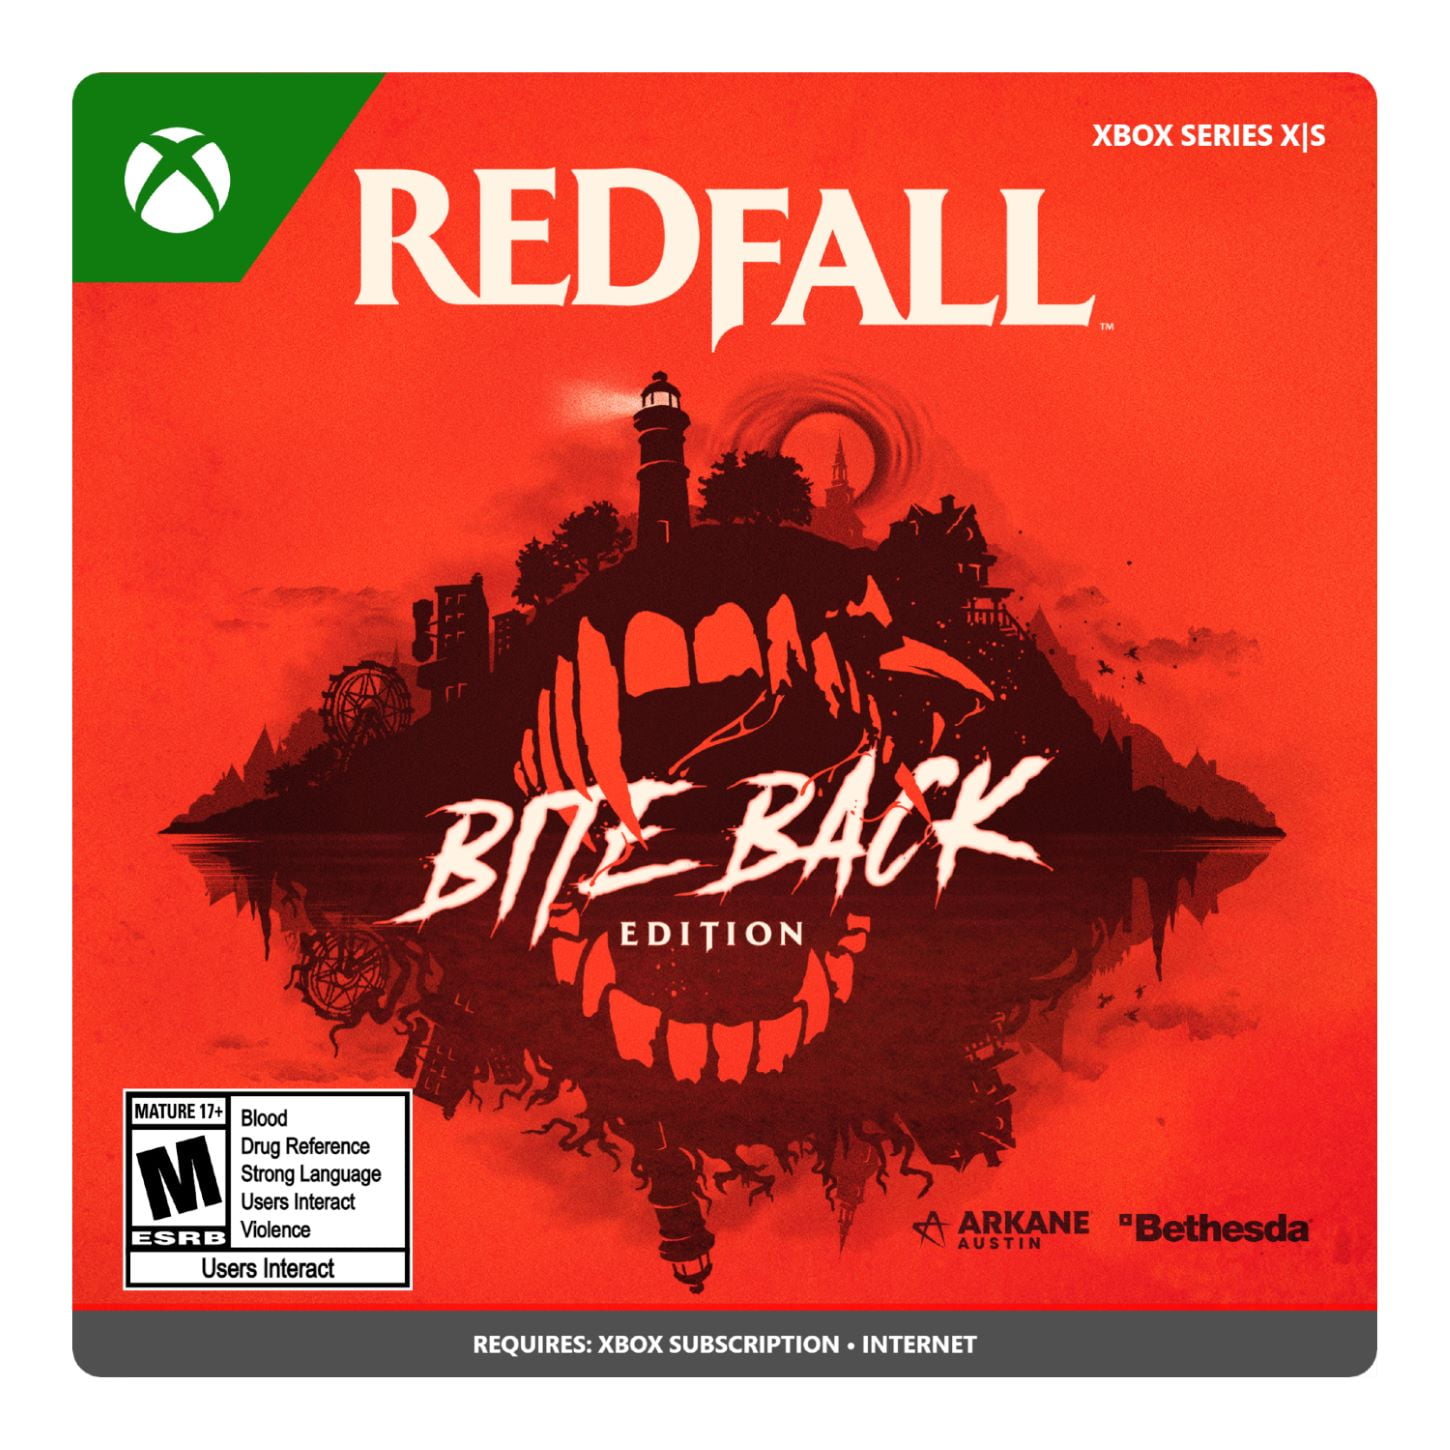 Buy Redfall Bite Back Edition Content - Microsoft Store en-IL